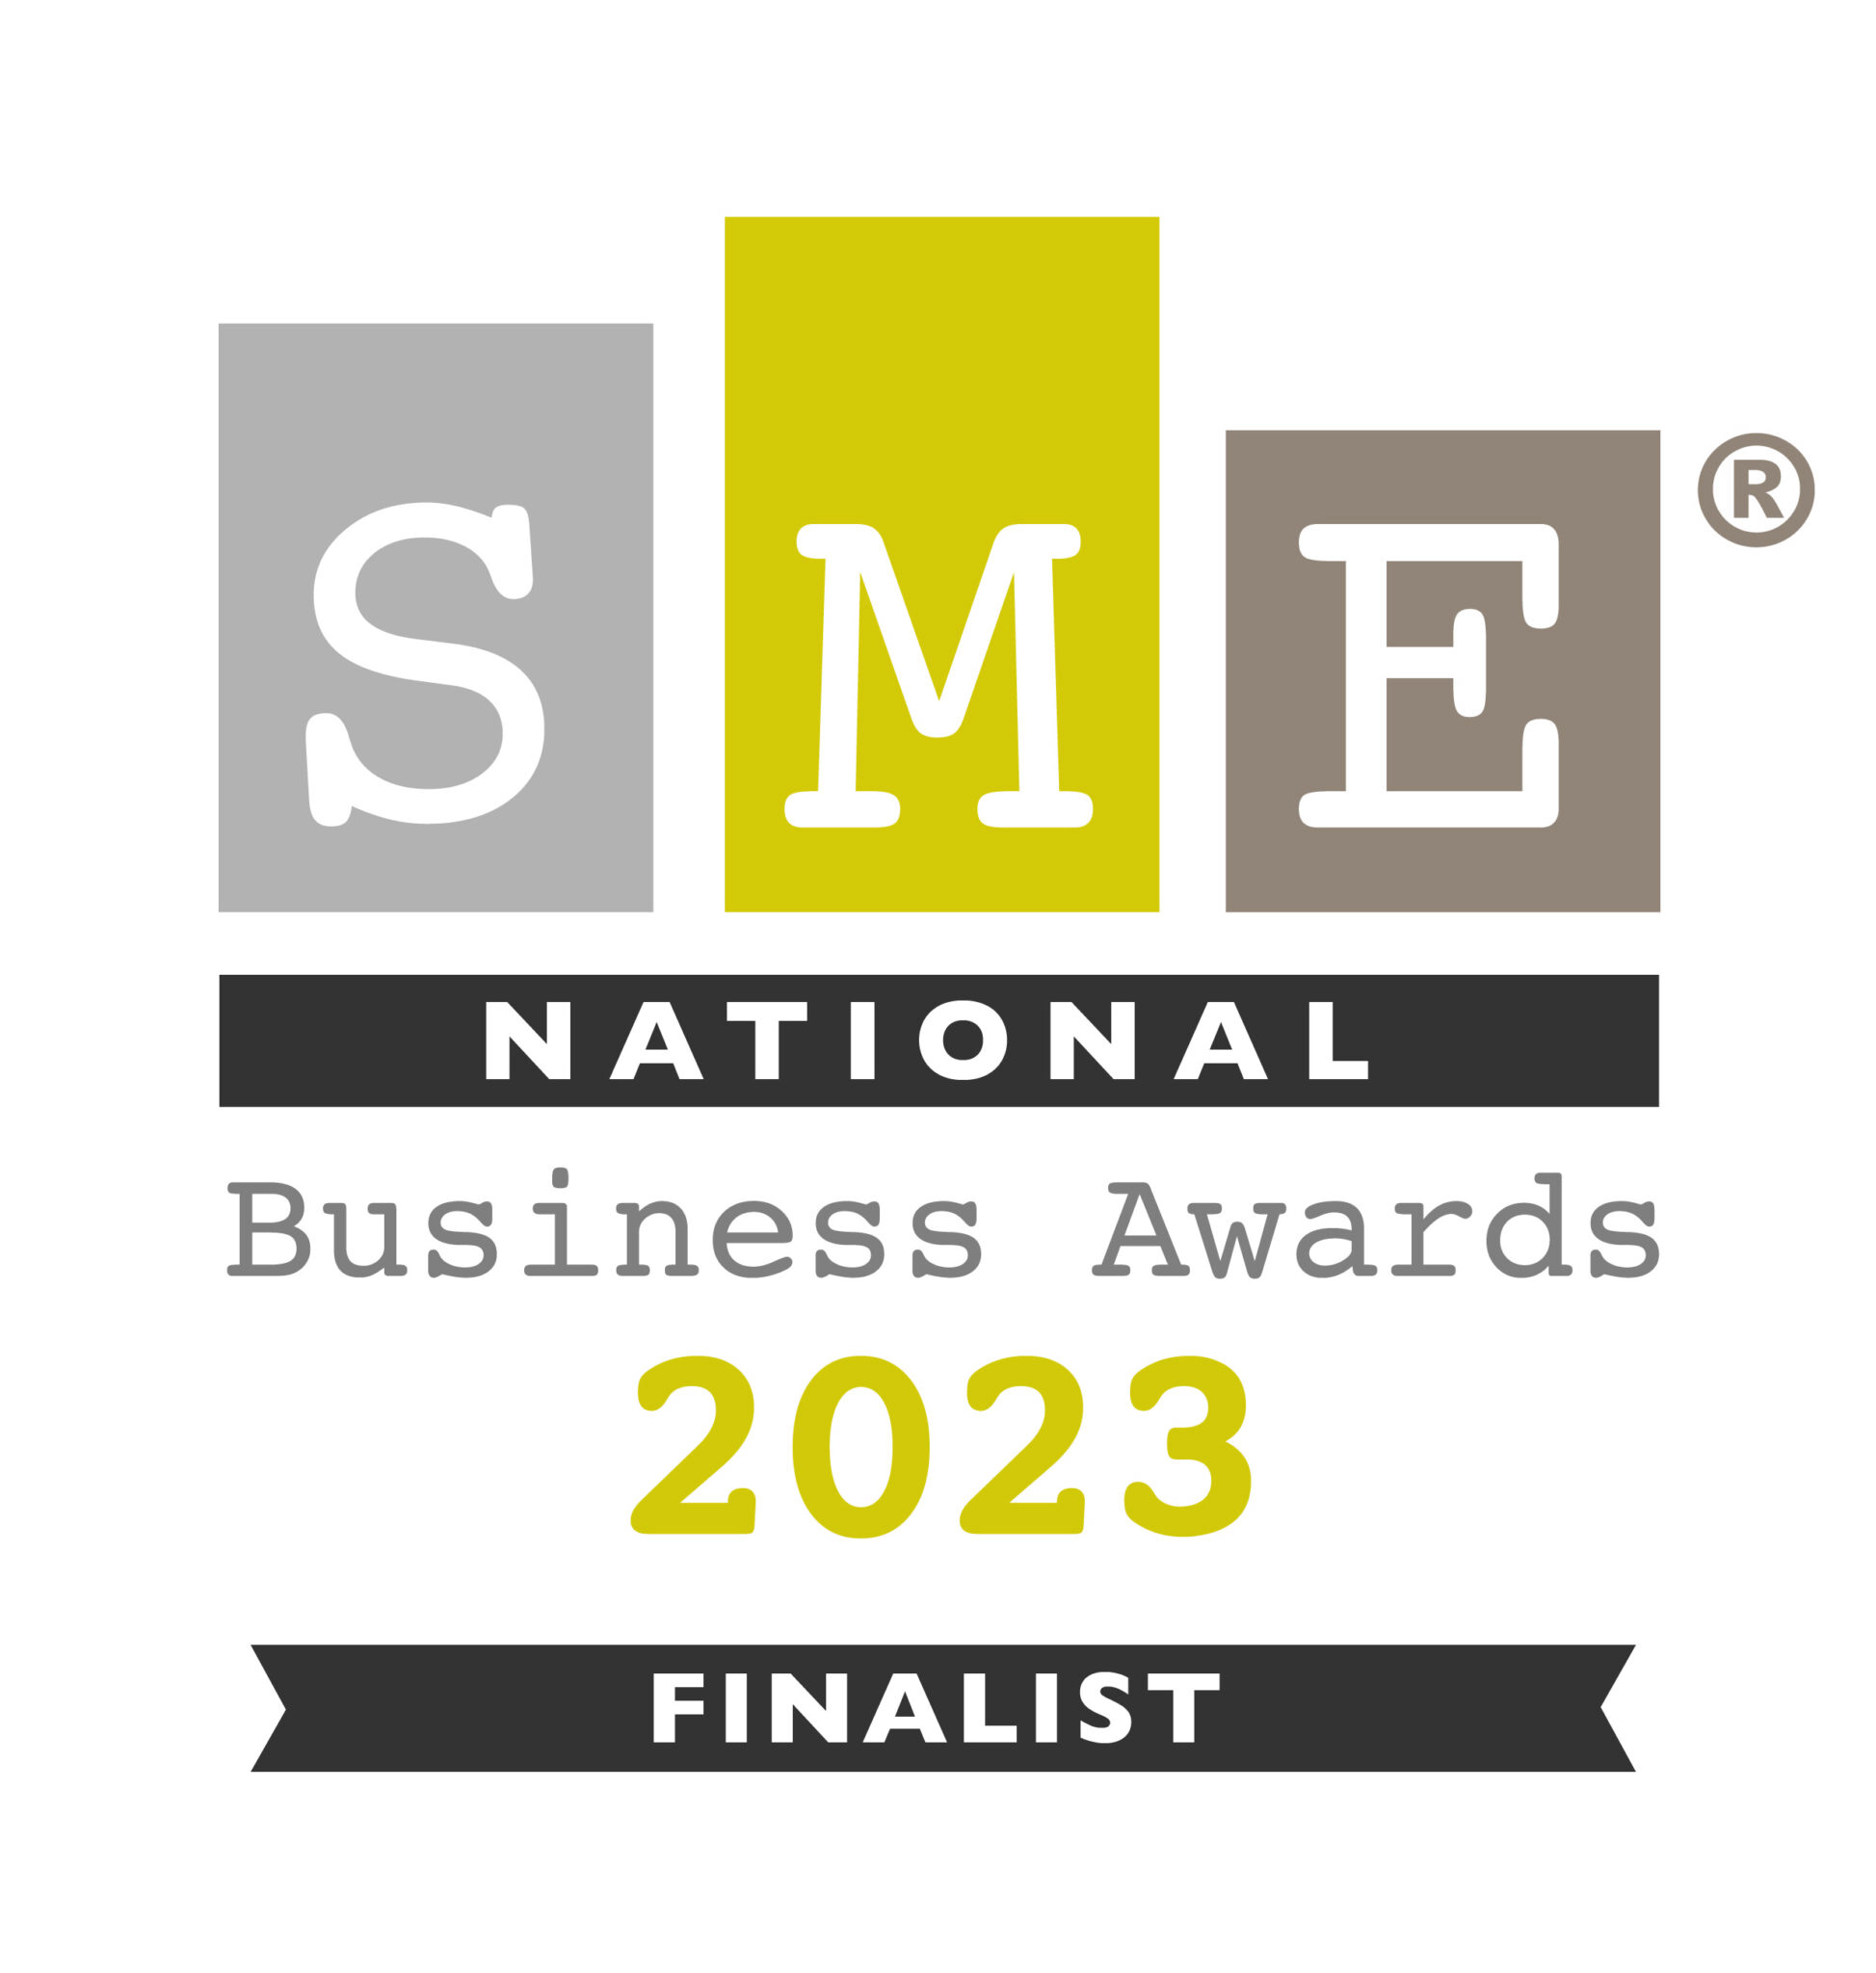 SME National Business Awards 2023 finalist logo